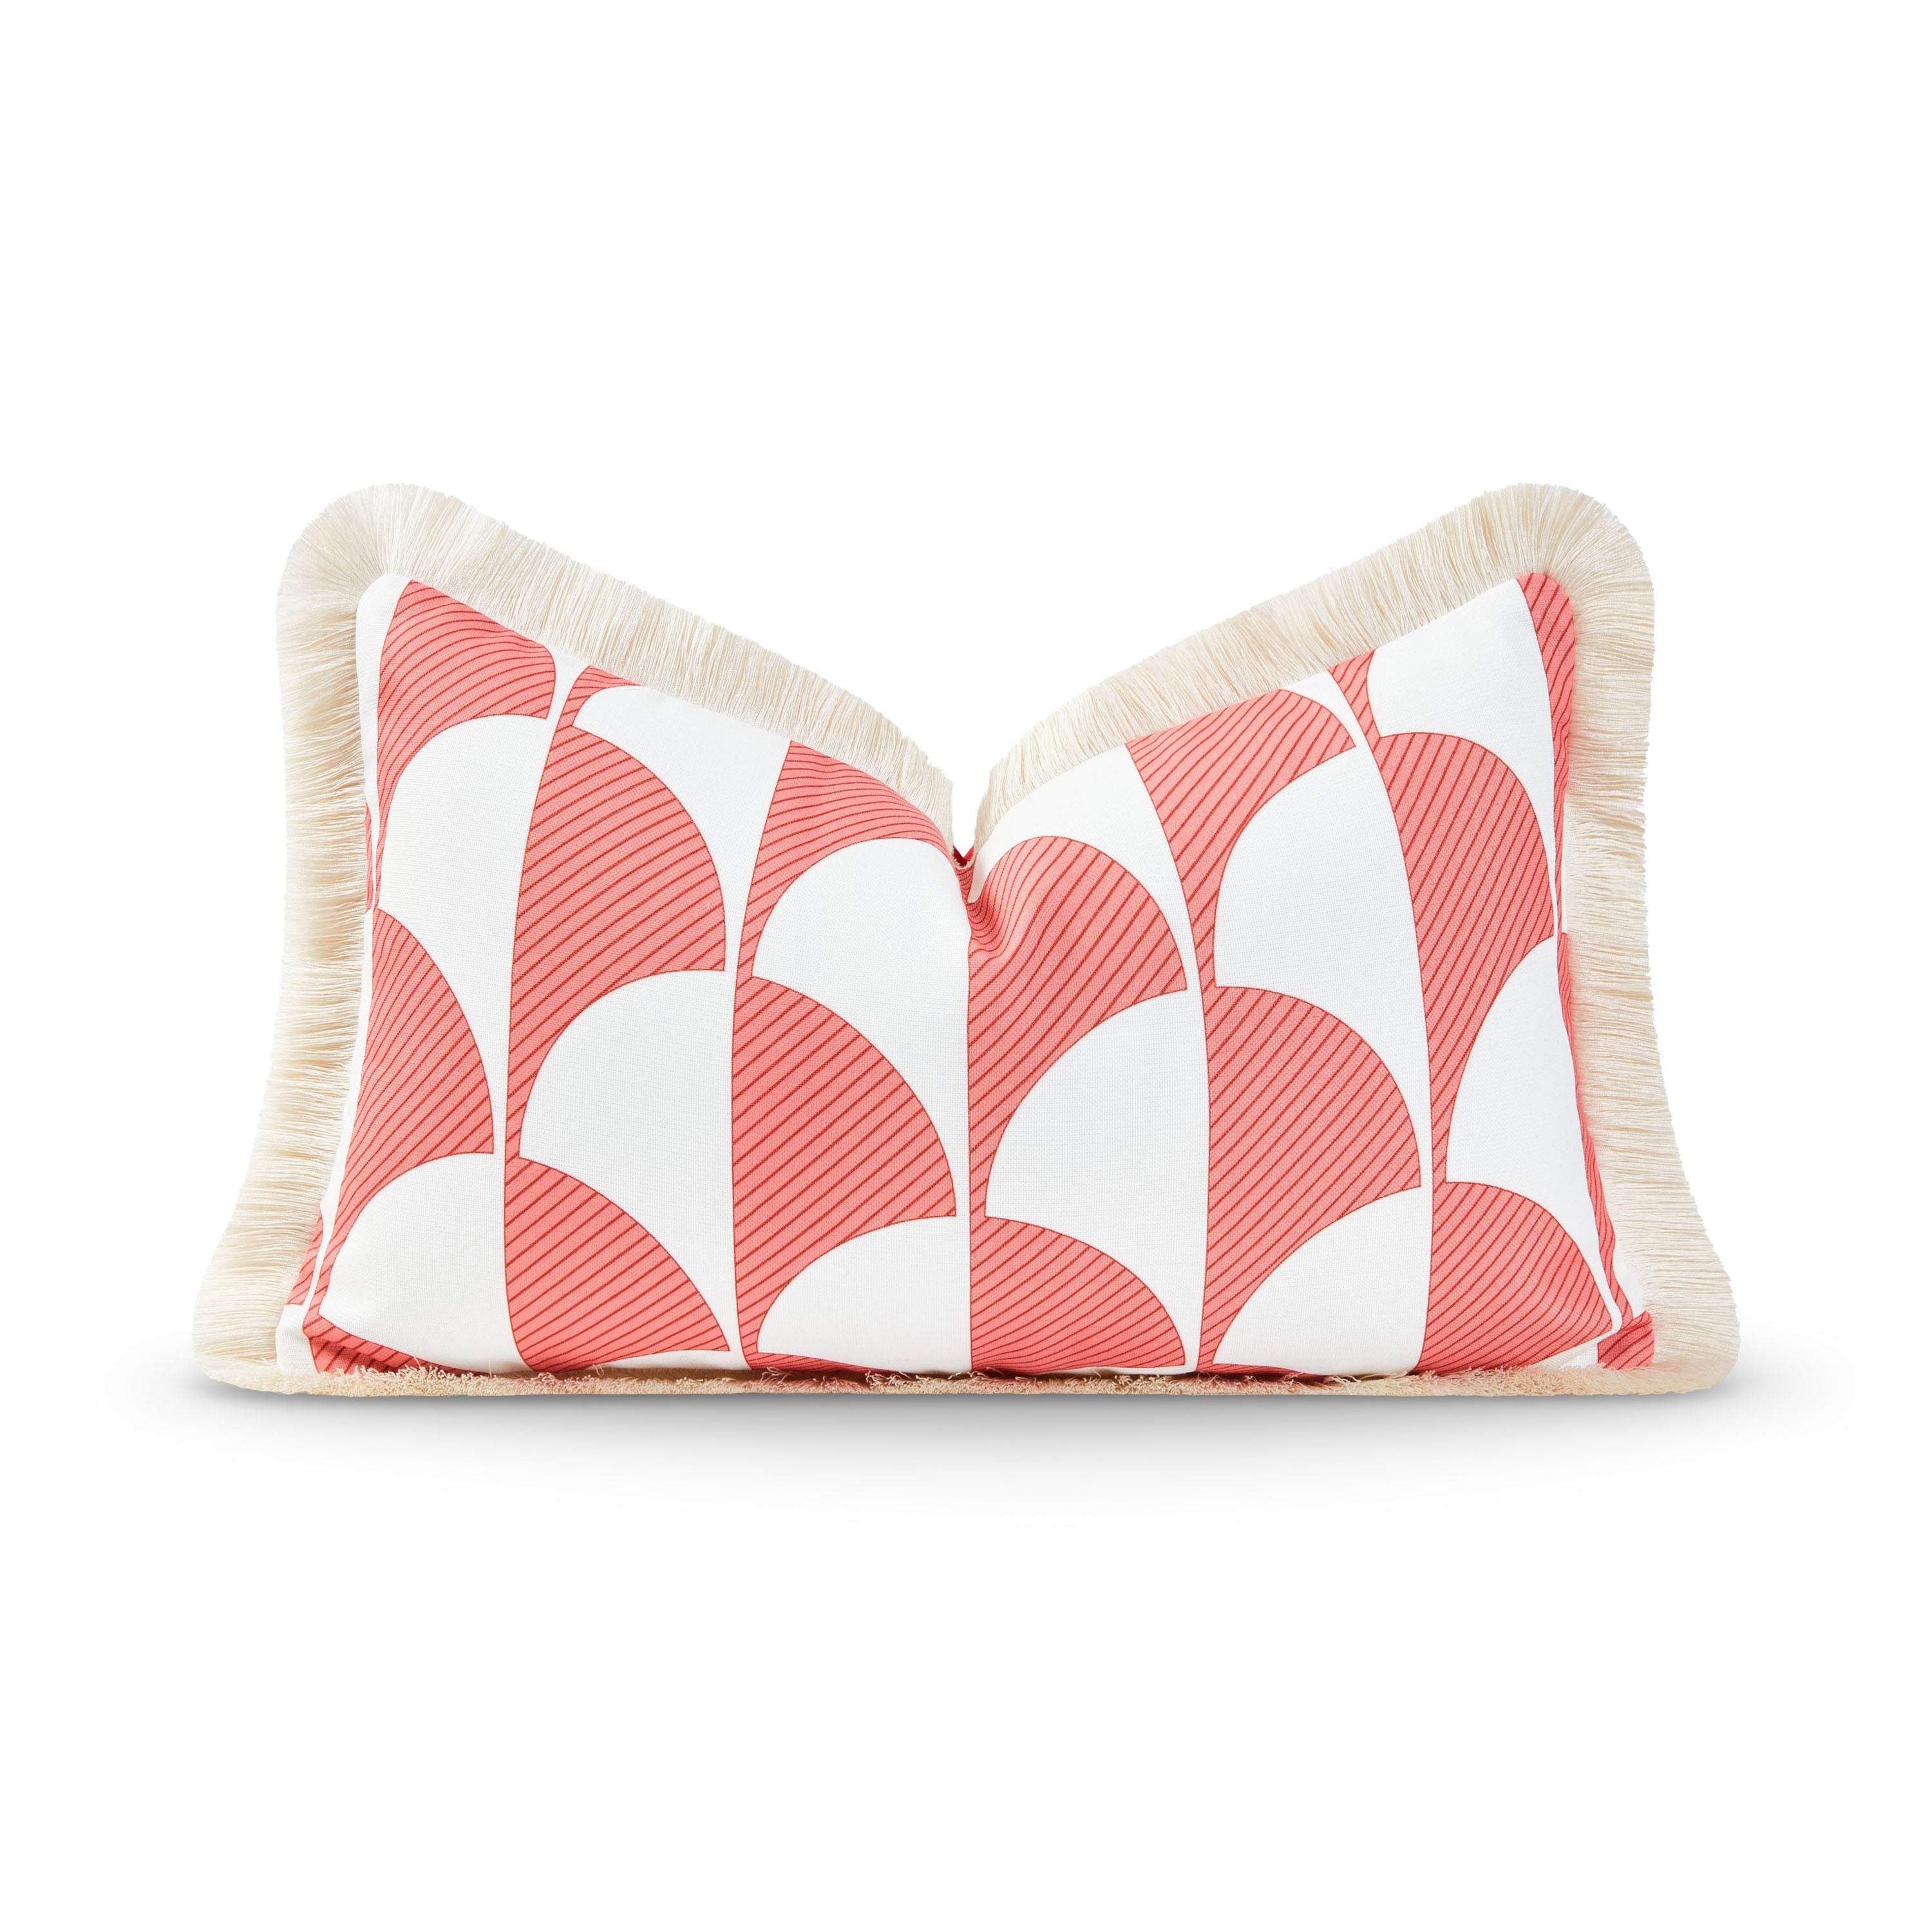 Coastal Indoor Outdoor Lumbar Pillow Cover, Scale Motif Fringe, Coral Pink, 12"x20"